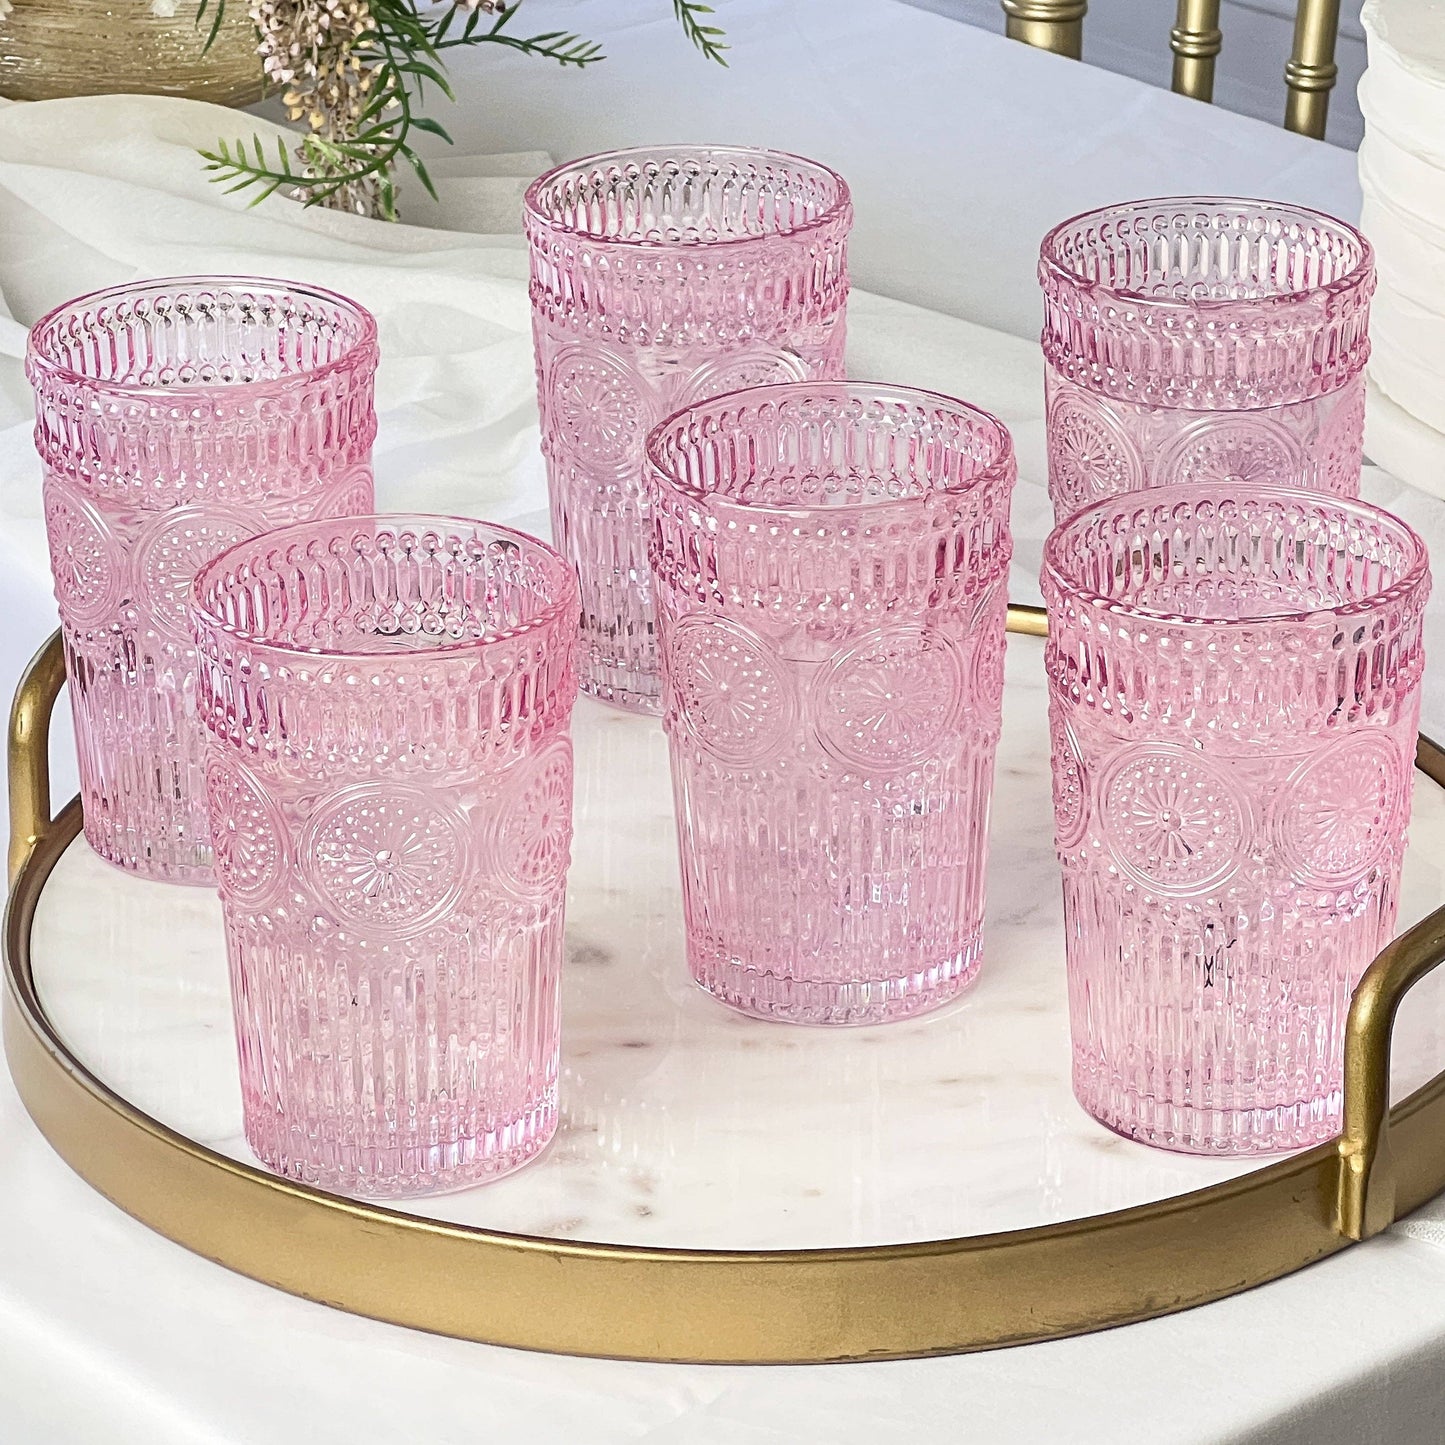 13 oz. Vintage Textured Pink Drinking Glasses (6 pcs)